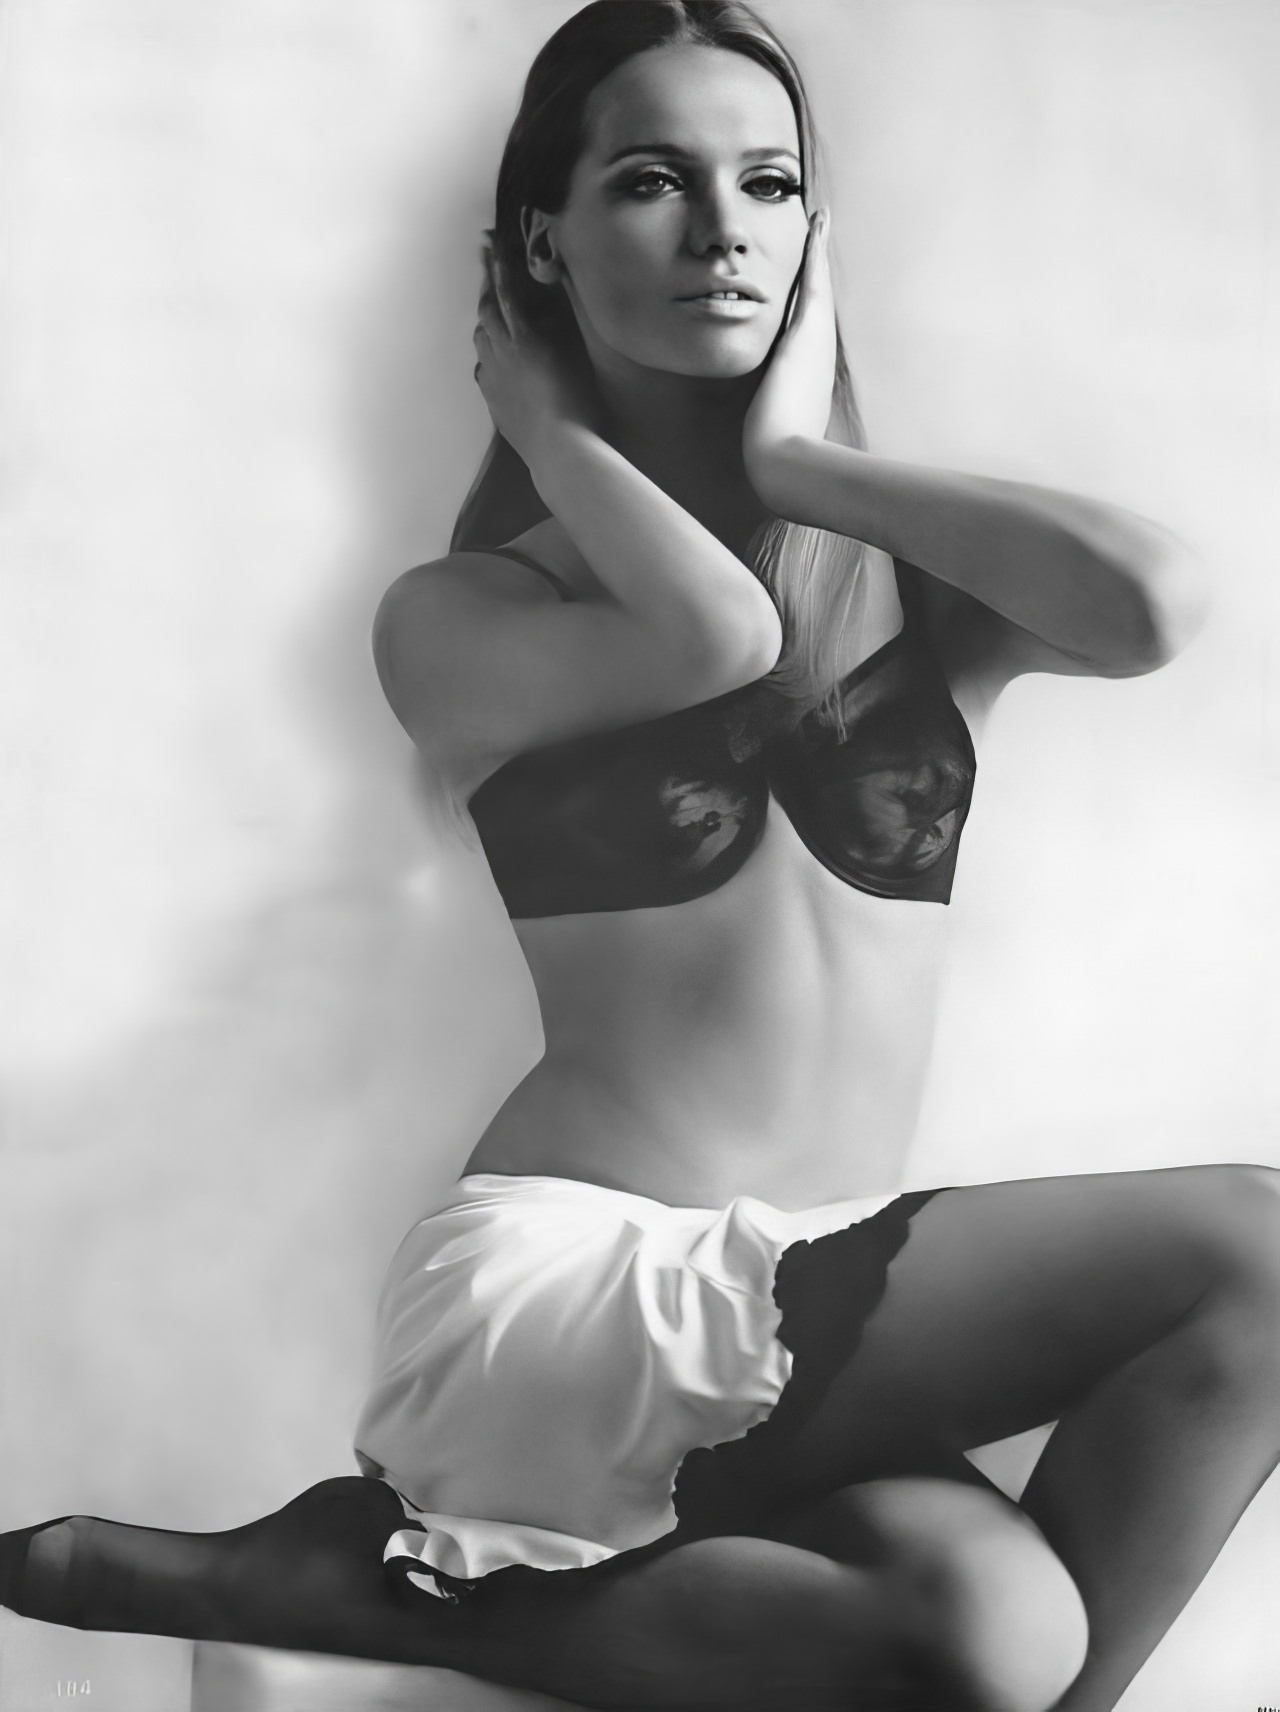 Veruschka in a black lace bra and white slip by Maidenform and Kickernick, Vogue, March 1, 1966.